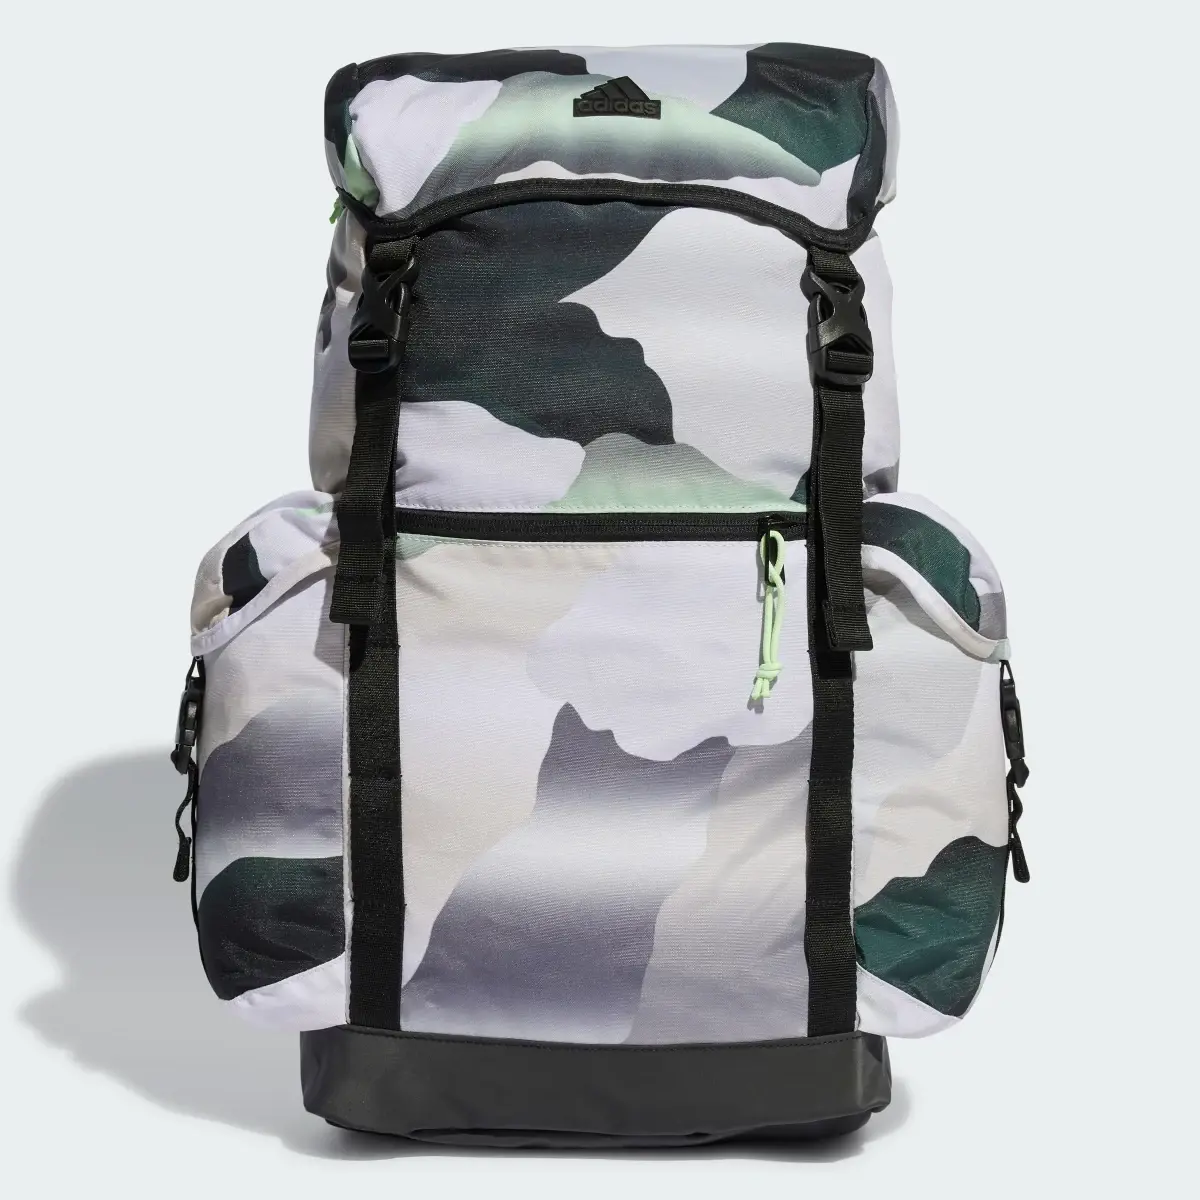 Adidas Xplorer Backpack. 1